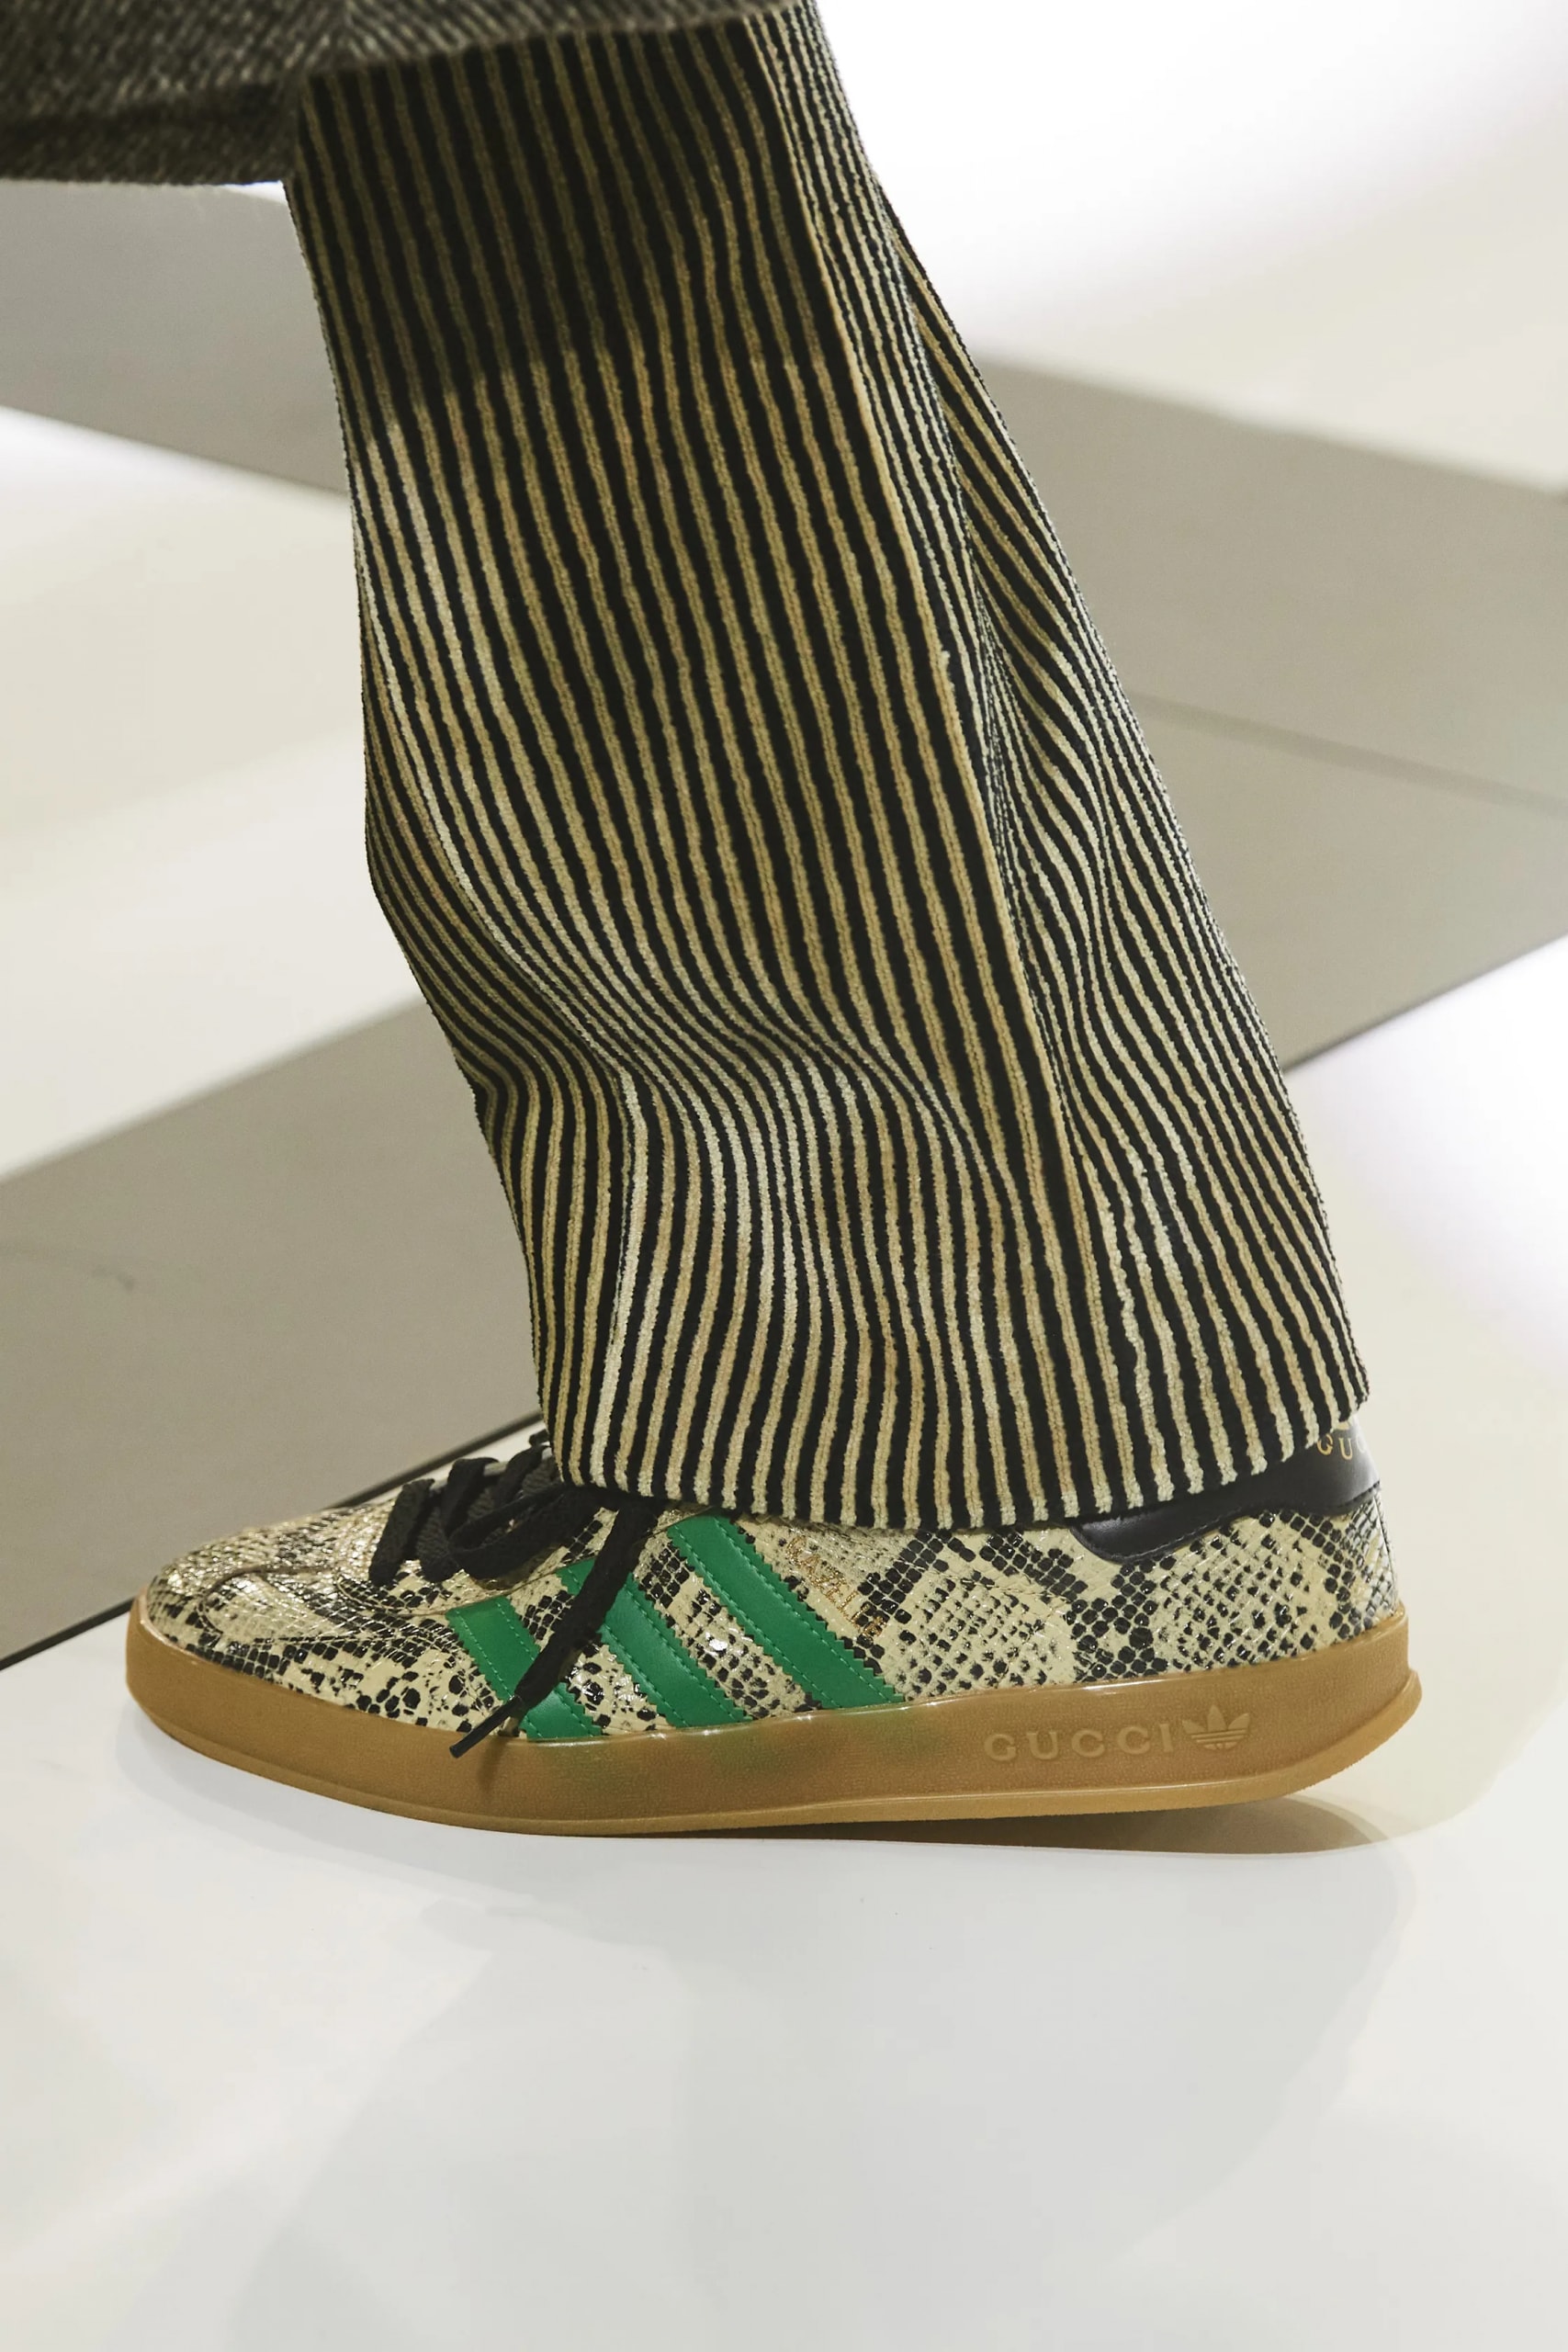 adidas Gucci Samba Collaboration First Look